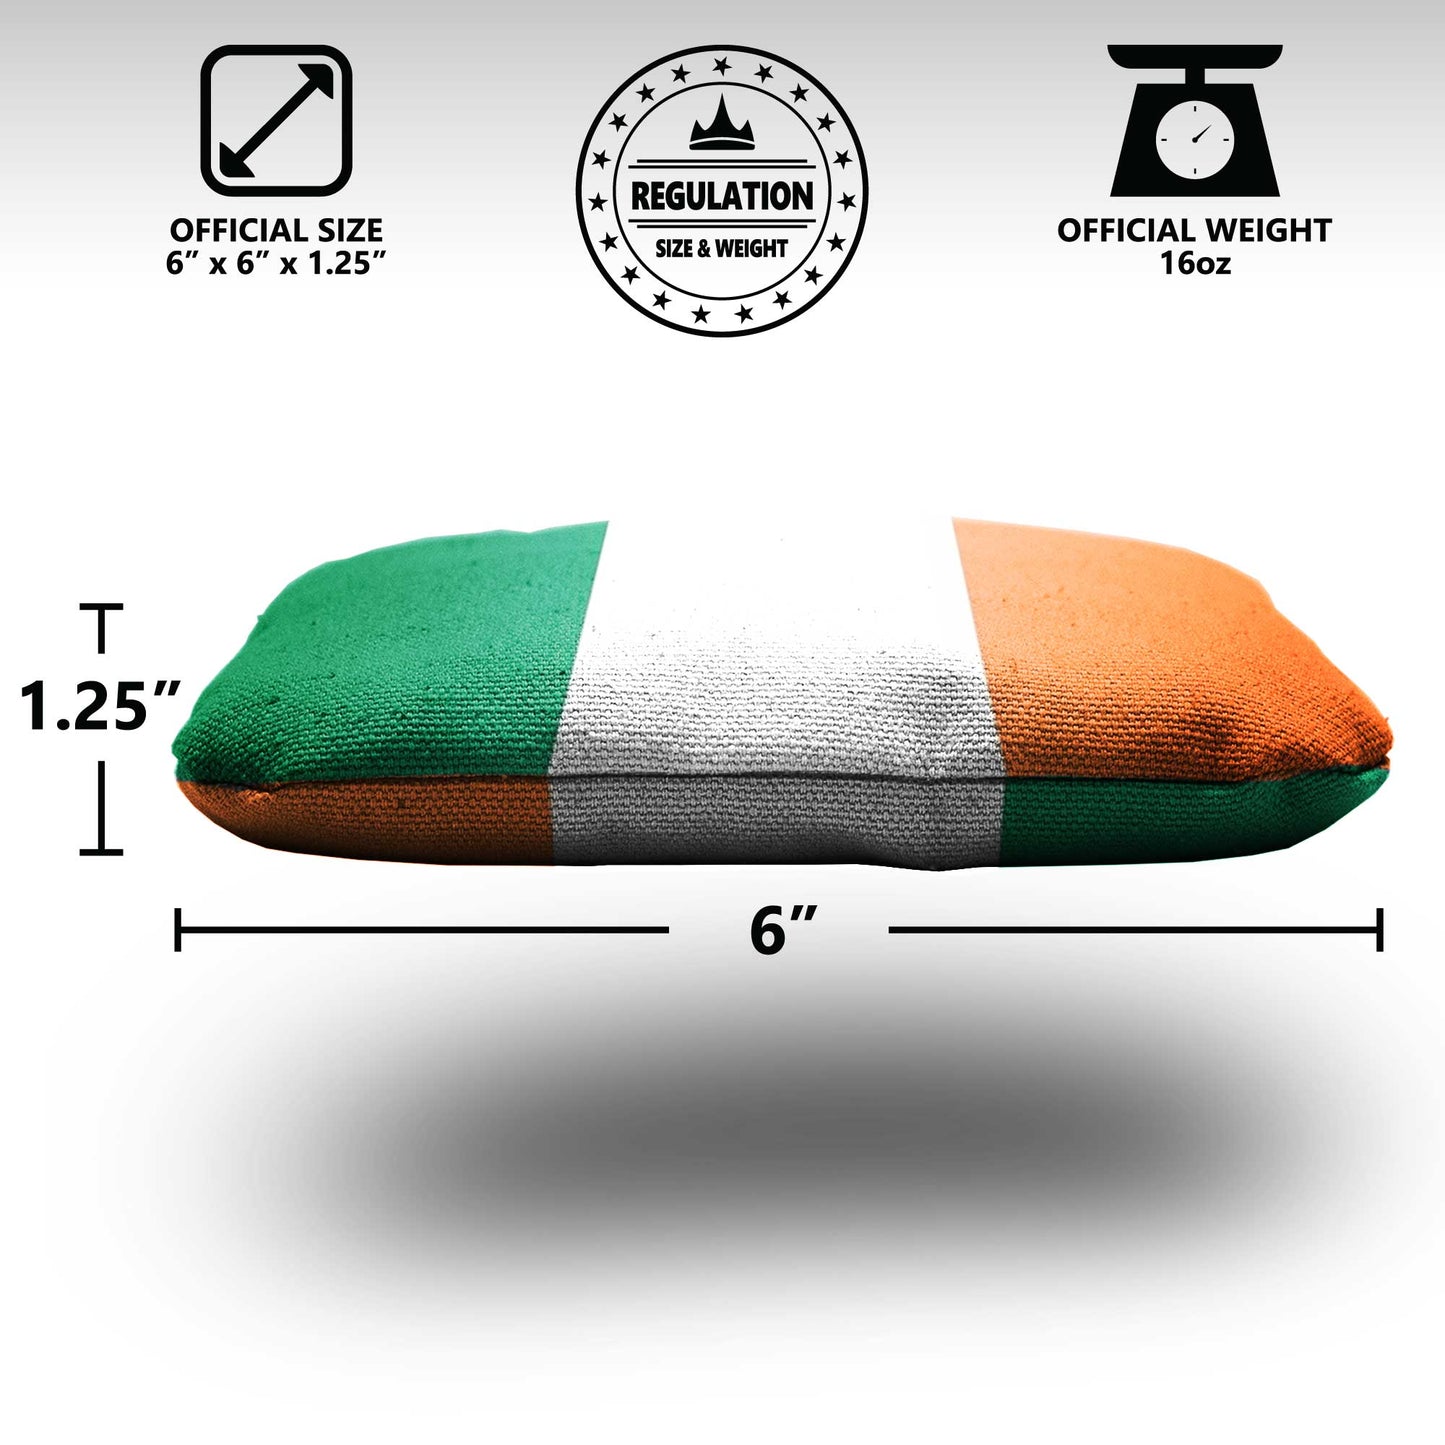 The Irish - 8 Cornhole Bags